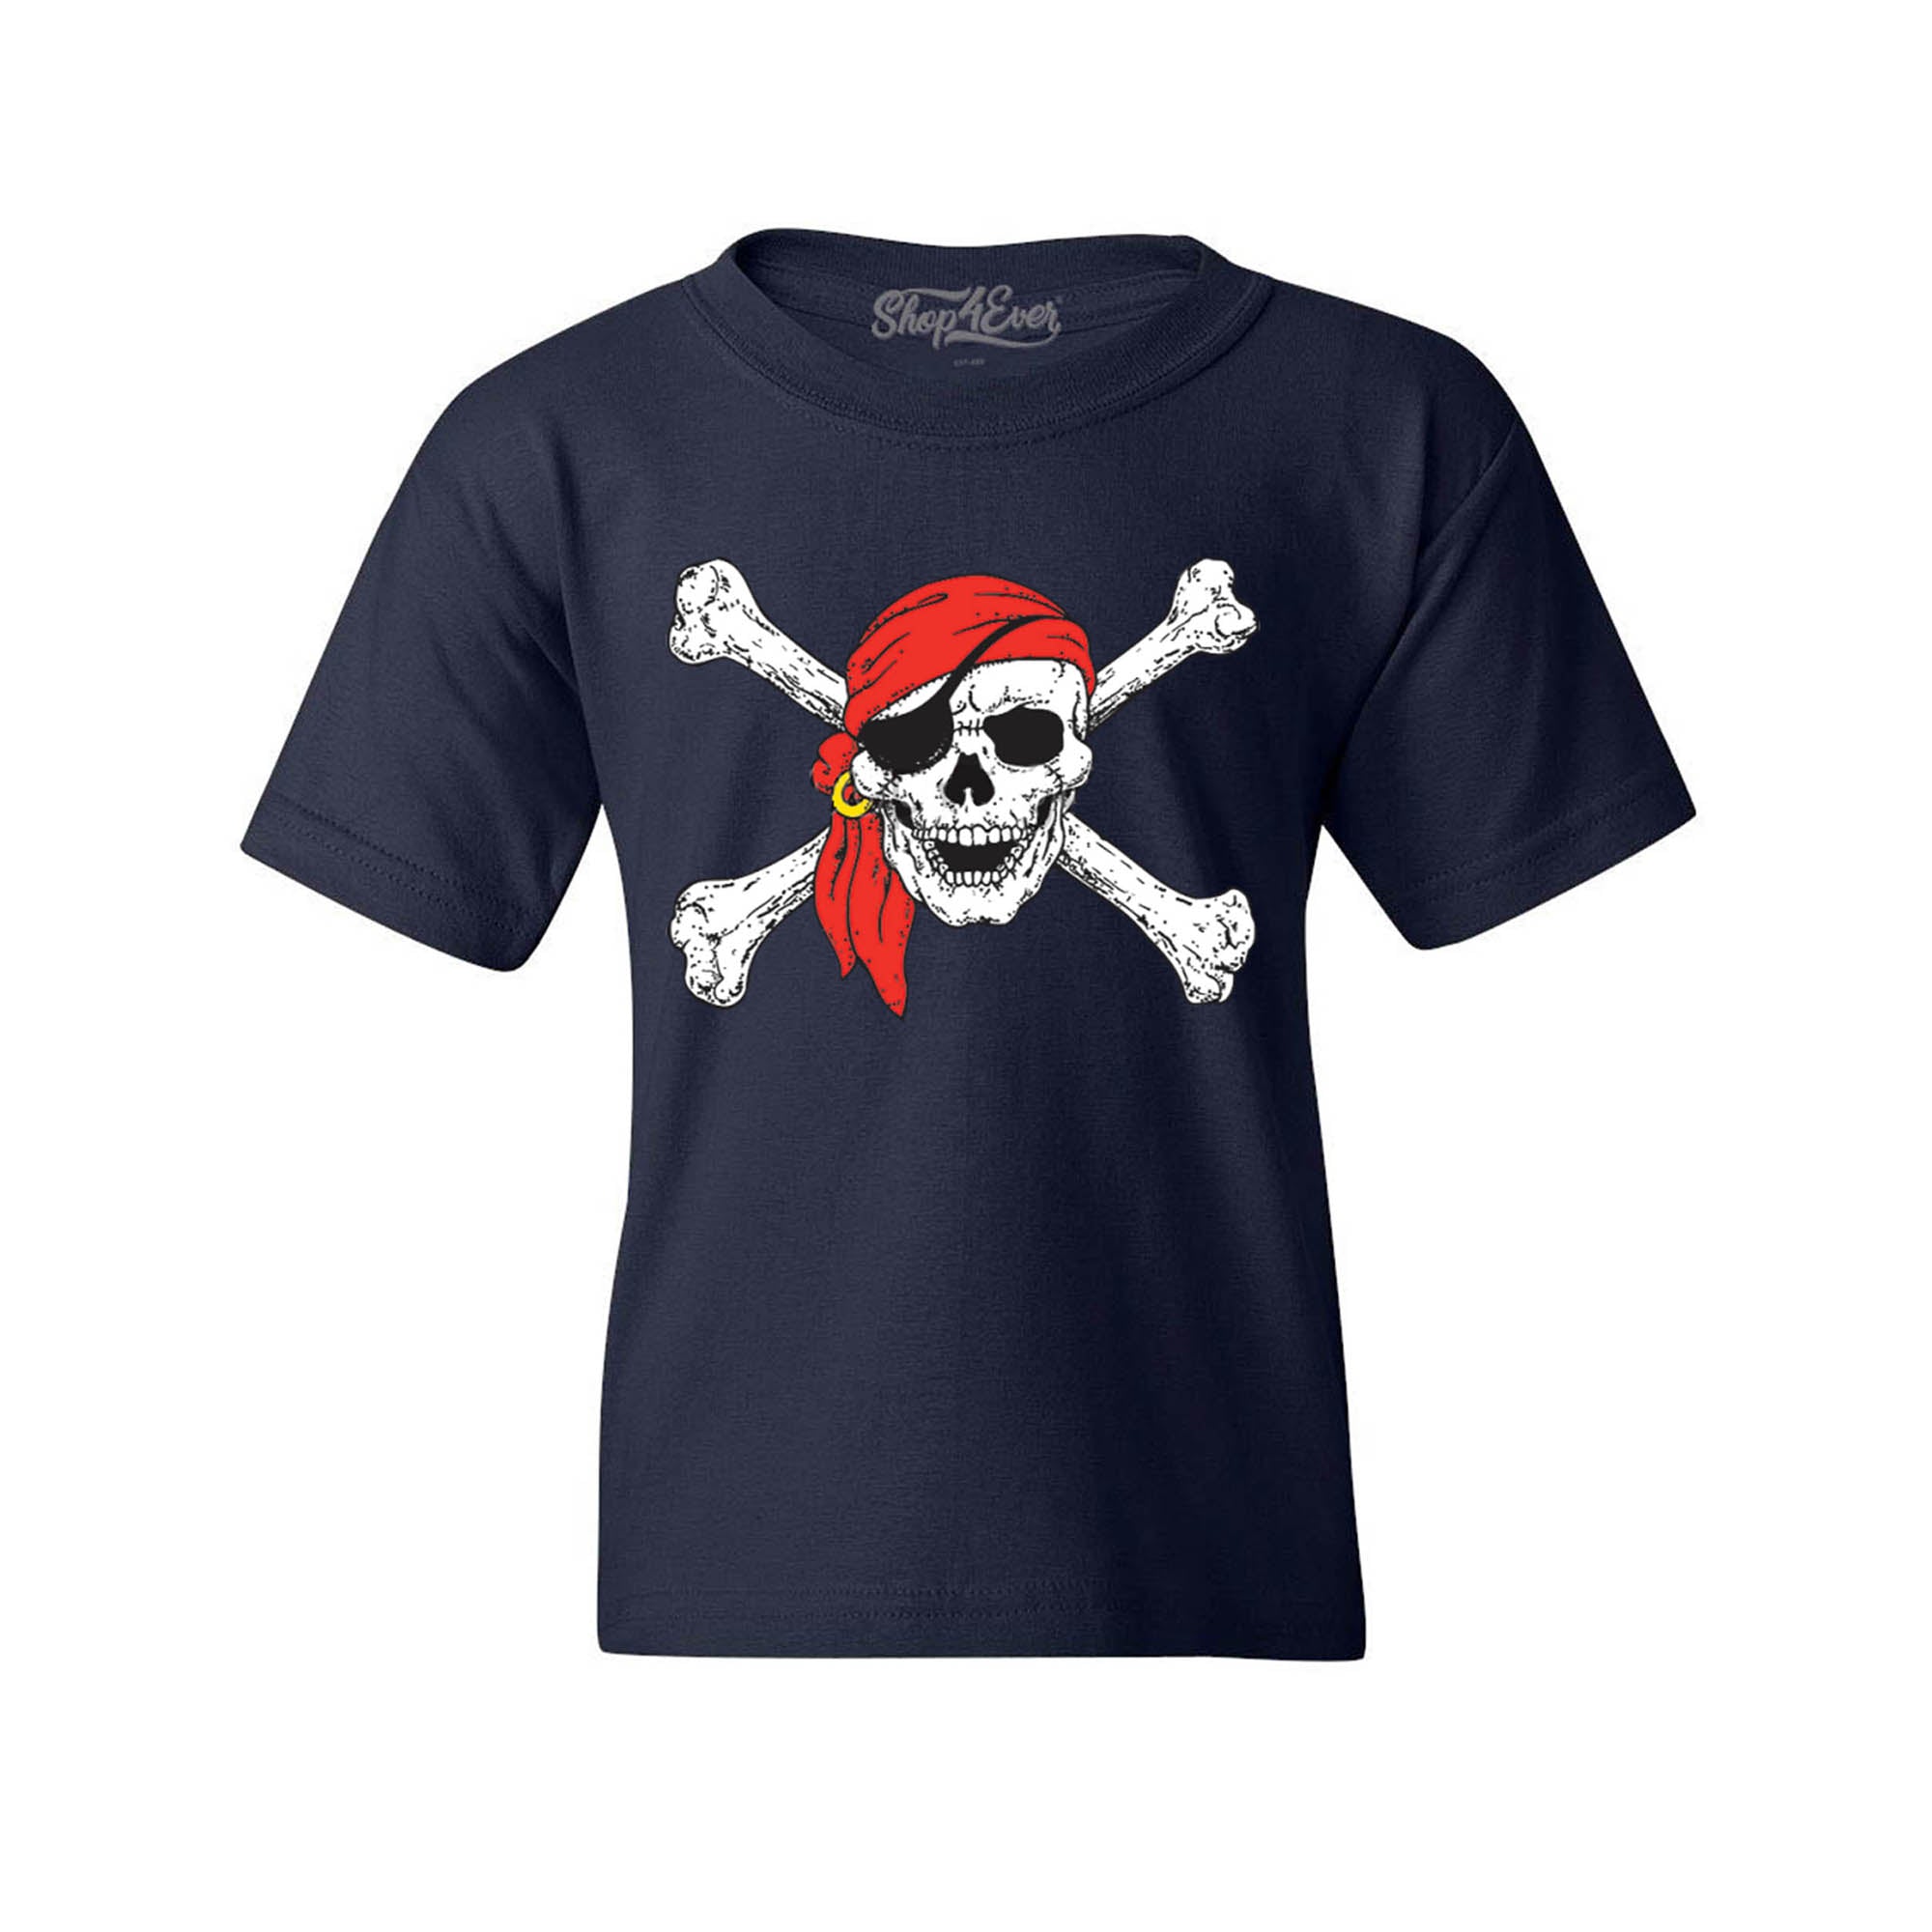 Pirate Skull & Crossbones Youth's T-Shirt Pirate Flag Child Kids Tee Shirts